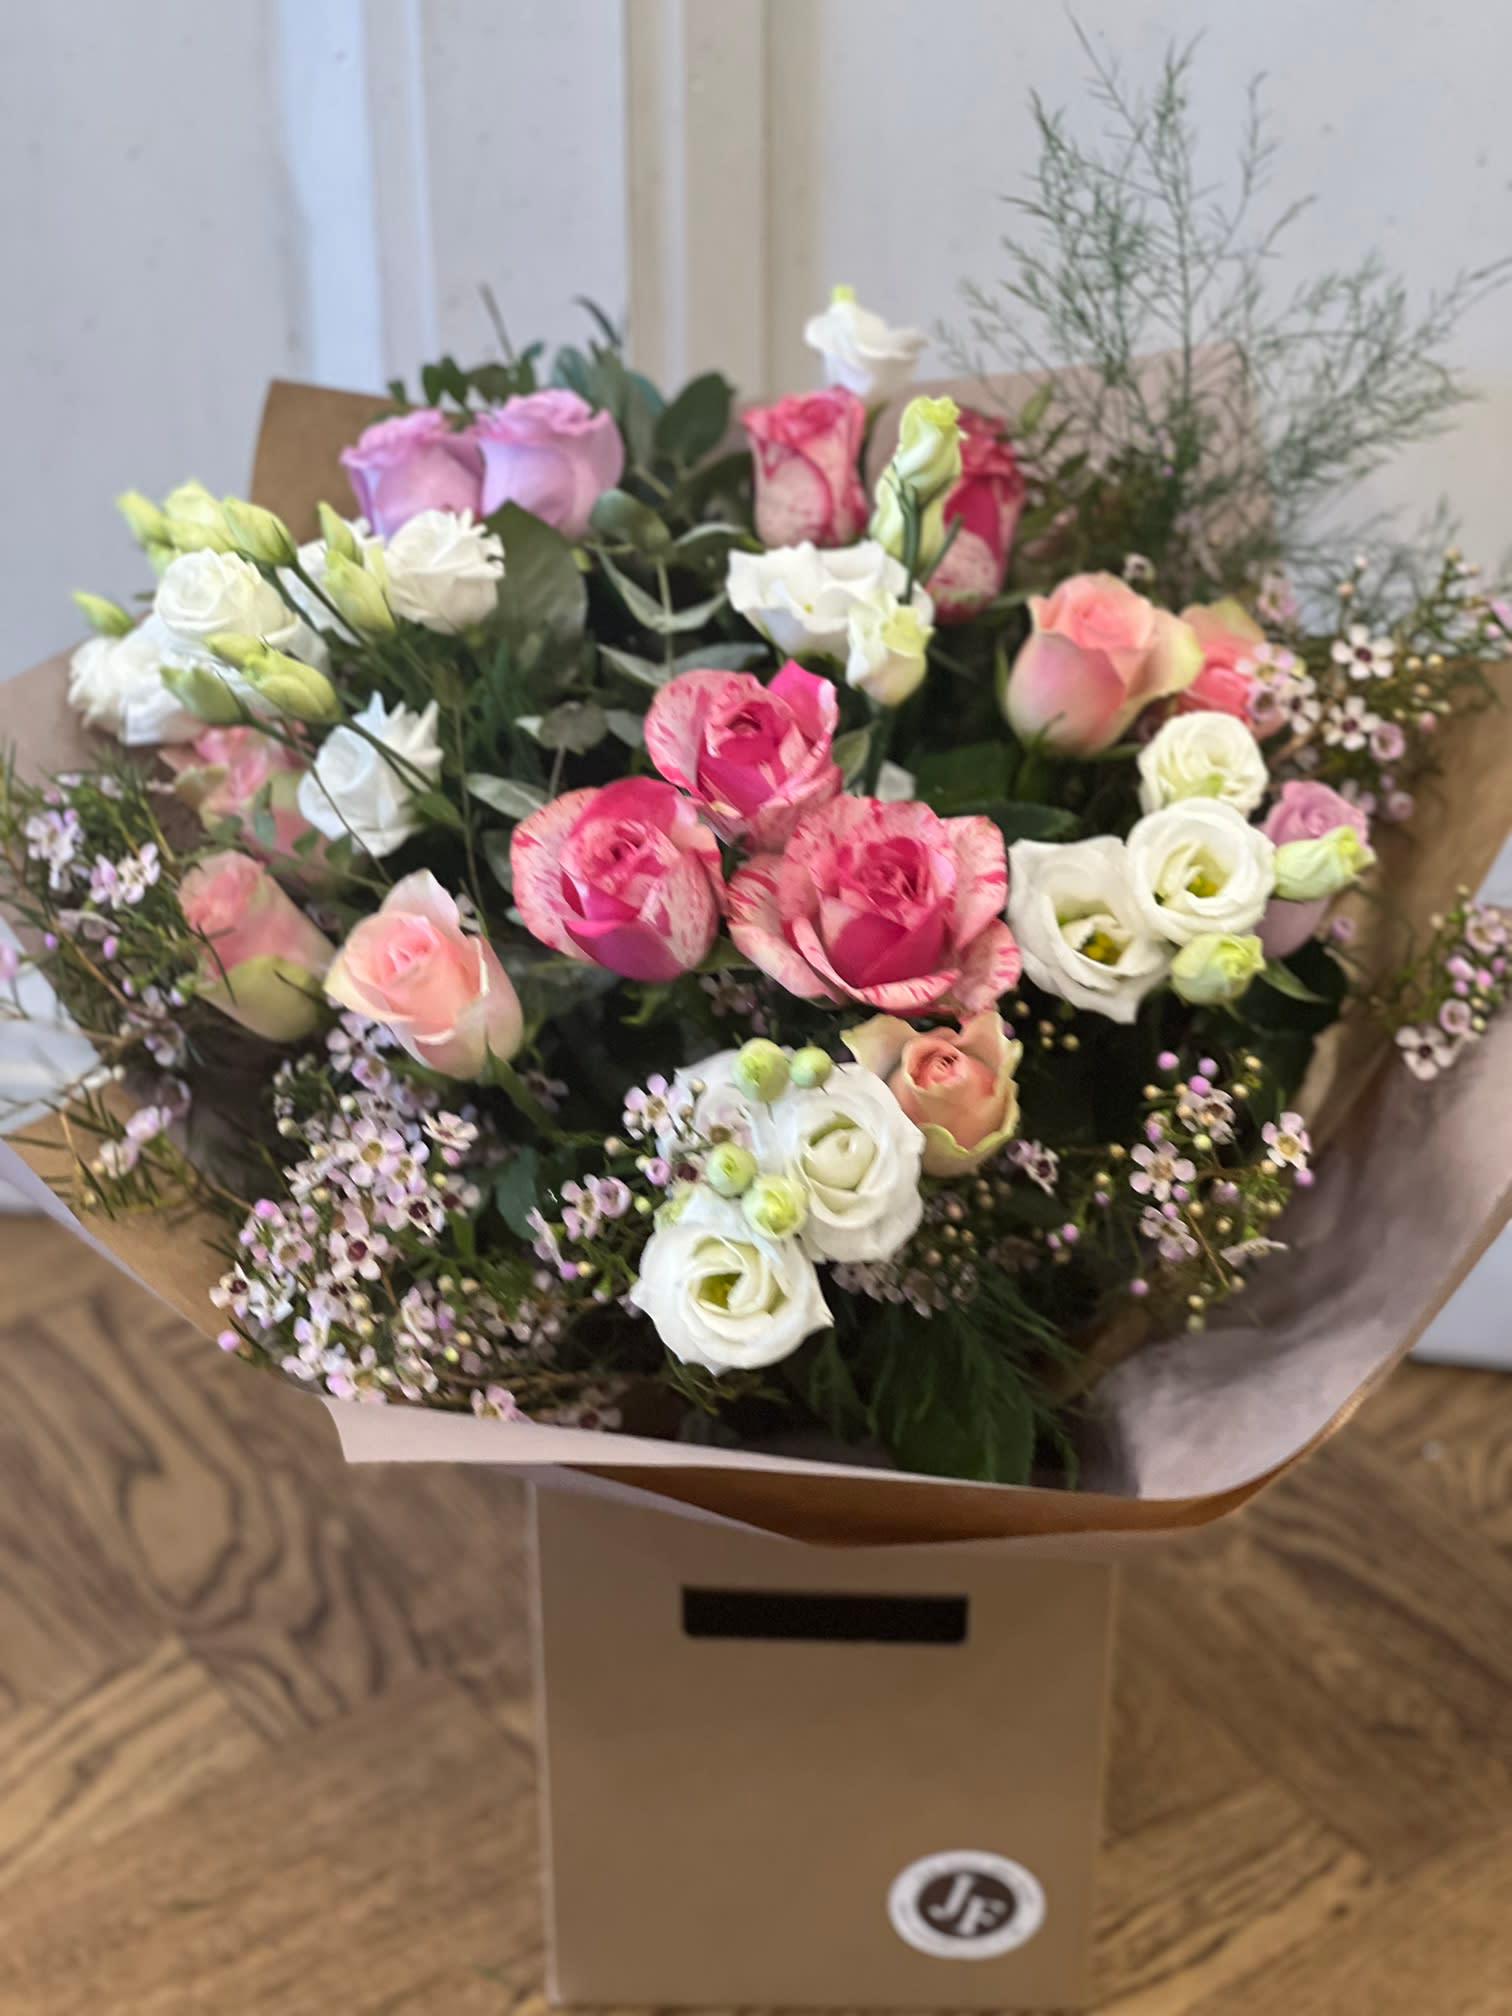 Julie's Flowers Newcastle Upon Tyne 01912 840627